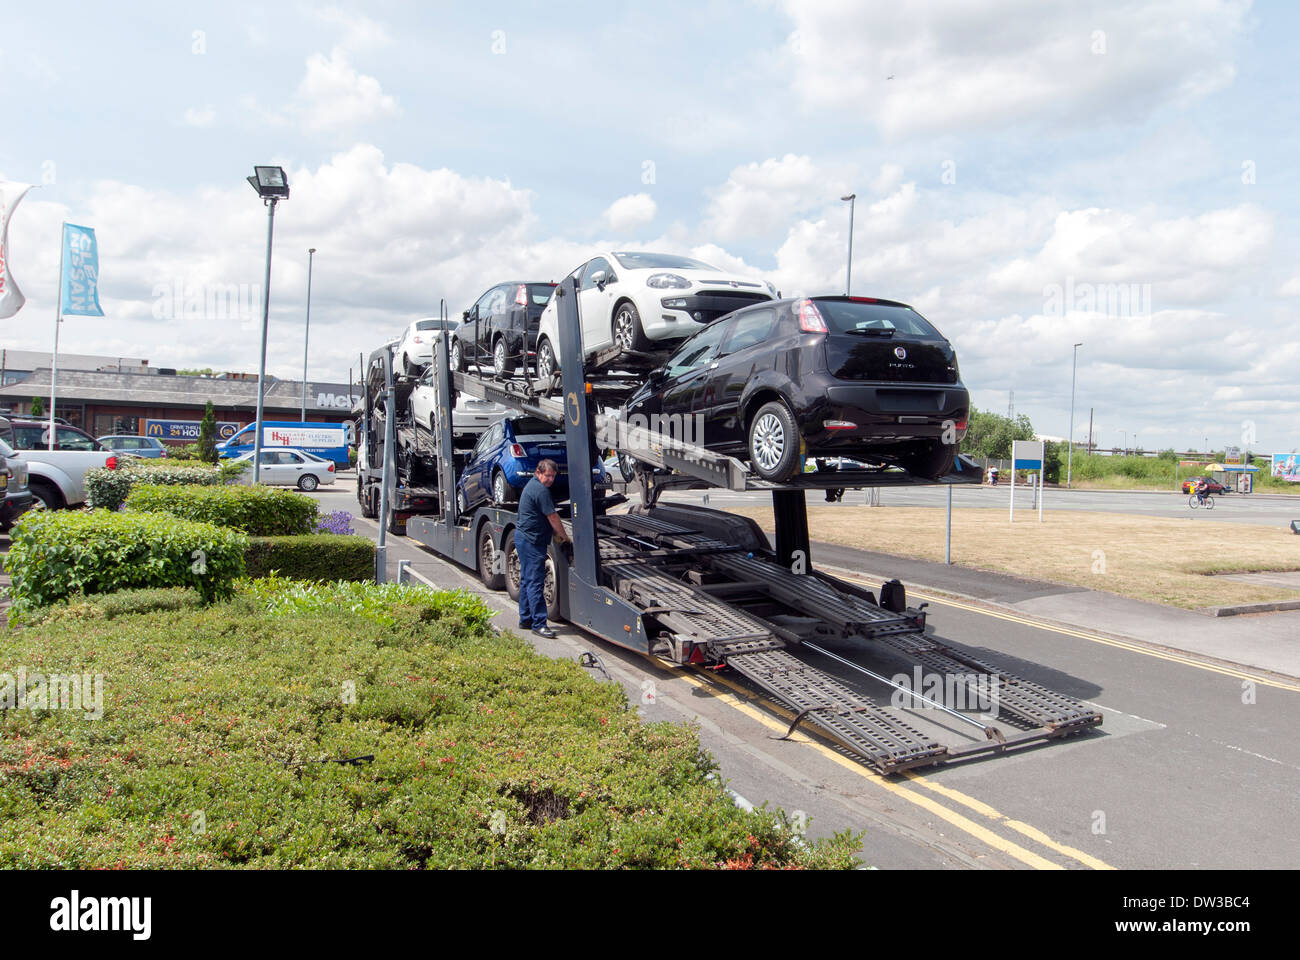 Driver unloading FIAT cars from car transporter, Warrington, Cheshire, UK Stock Photo